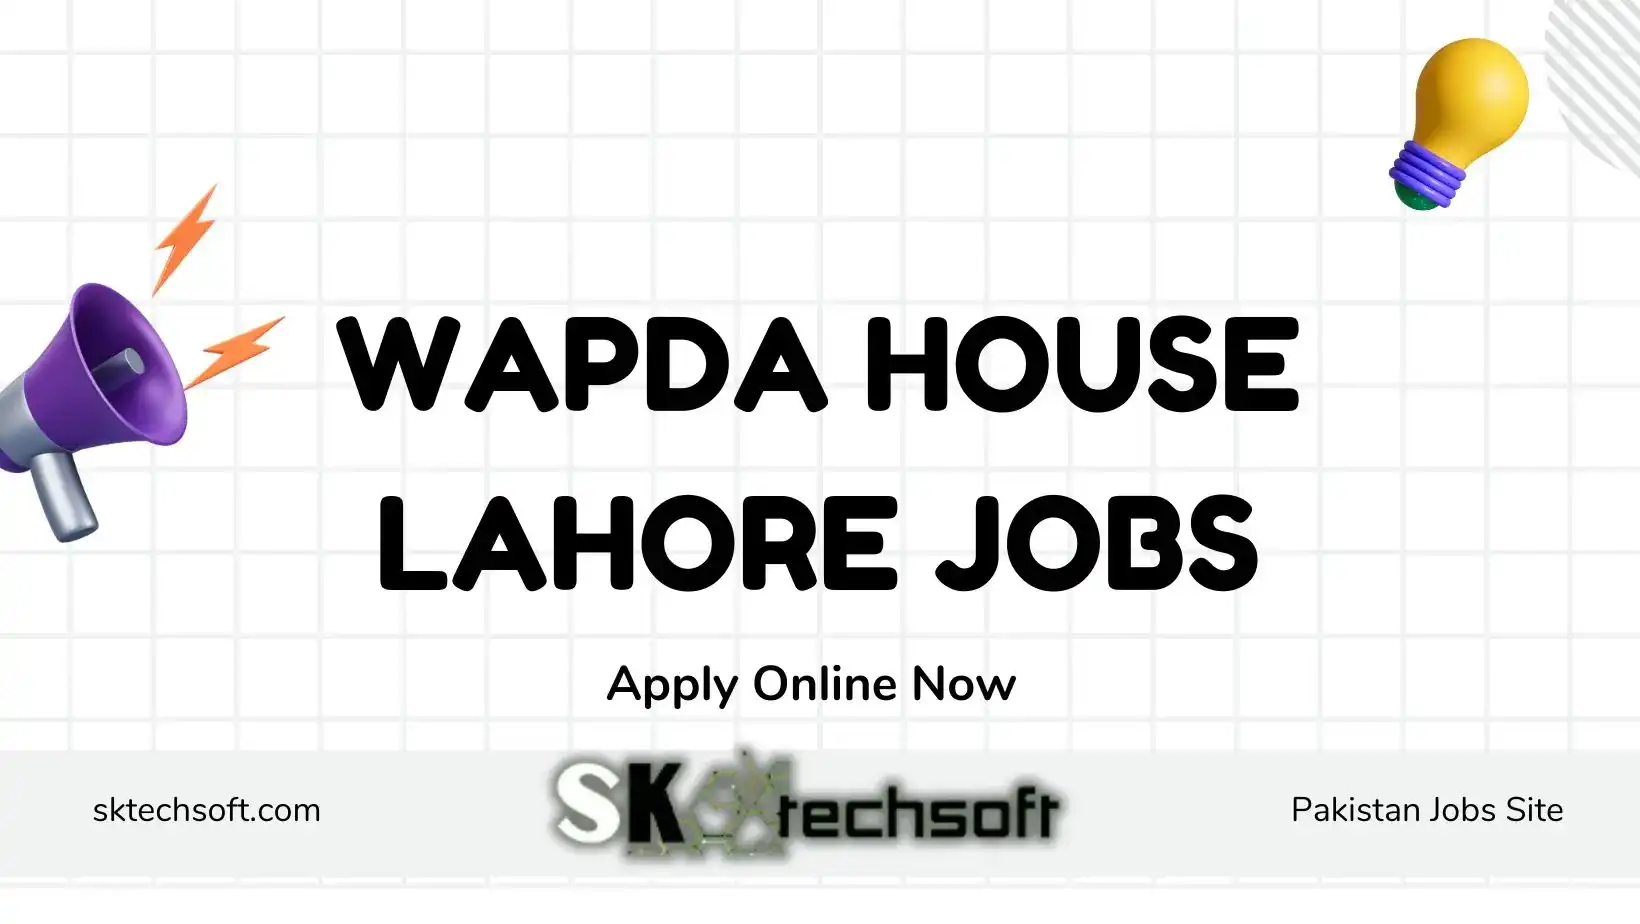 WAPDA House Lahore Jobs